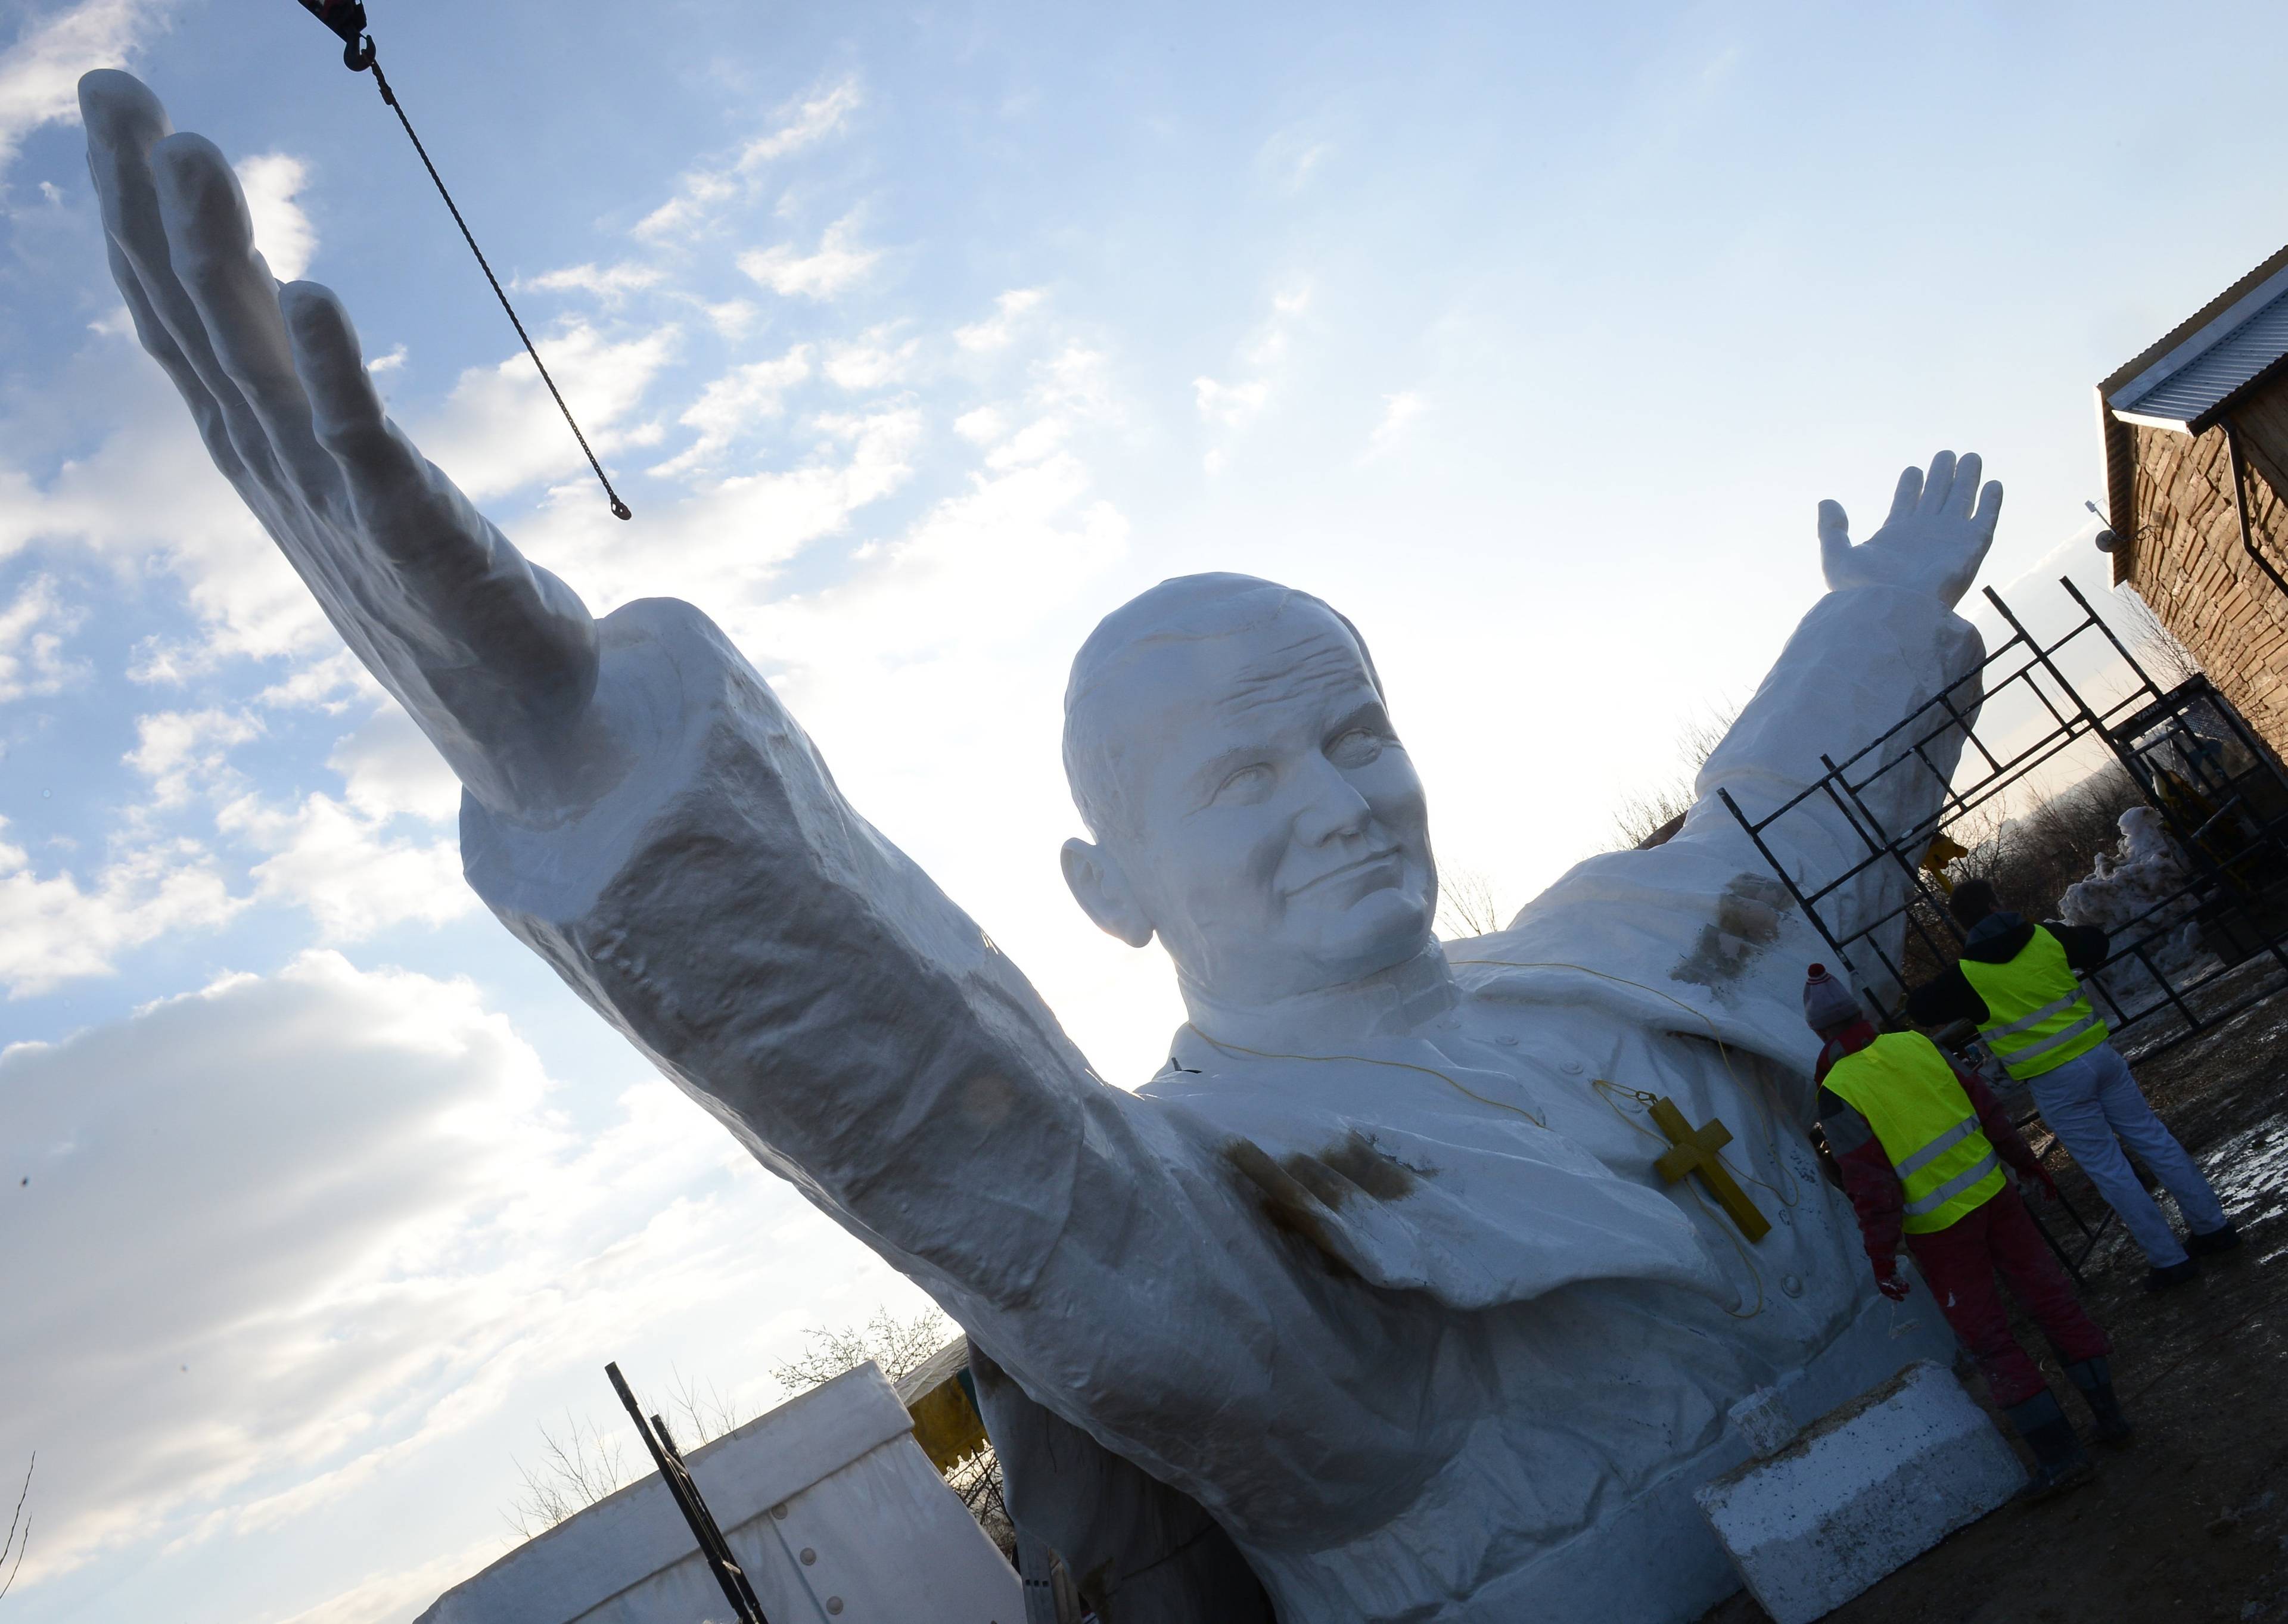 Workers clean elements of a 13,8m tall sculpture of late Pope John Paul II in Czestochowa, southern Poland on April 7, 2013. AFP PHOTO/JANEK SKARZYNSKI (Photo by JANEK SKARZYNSKI / AFP)